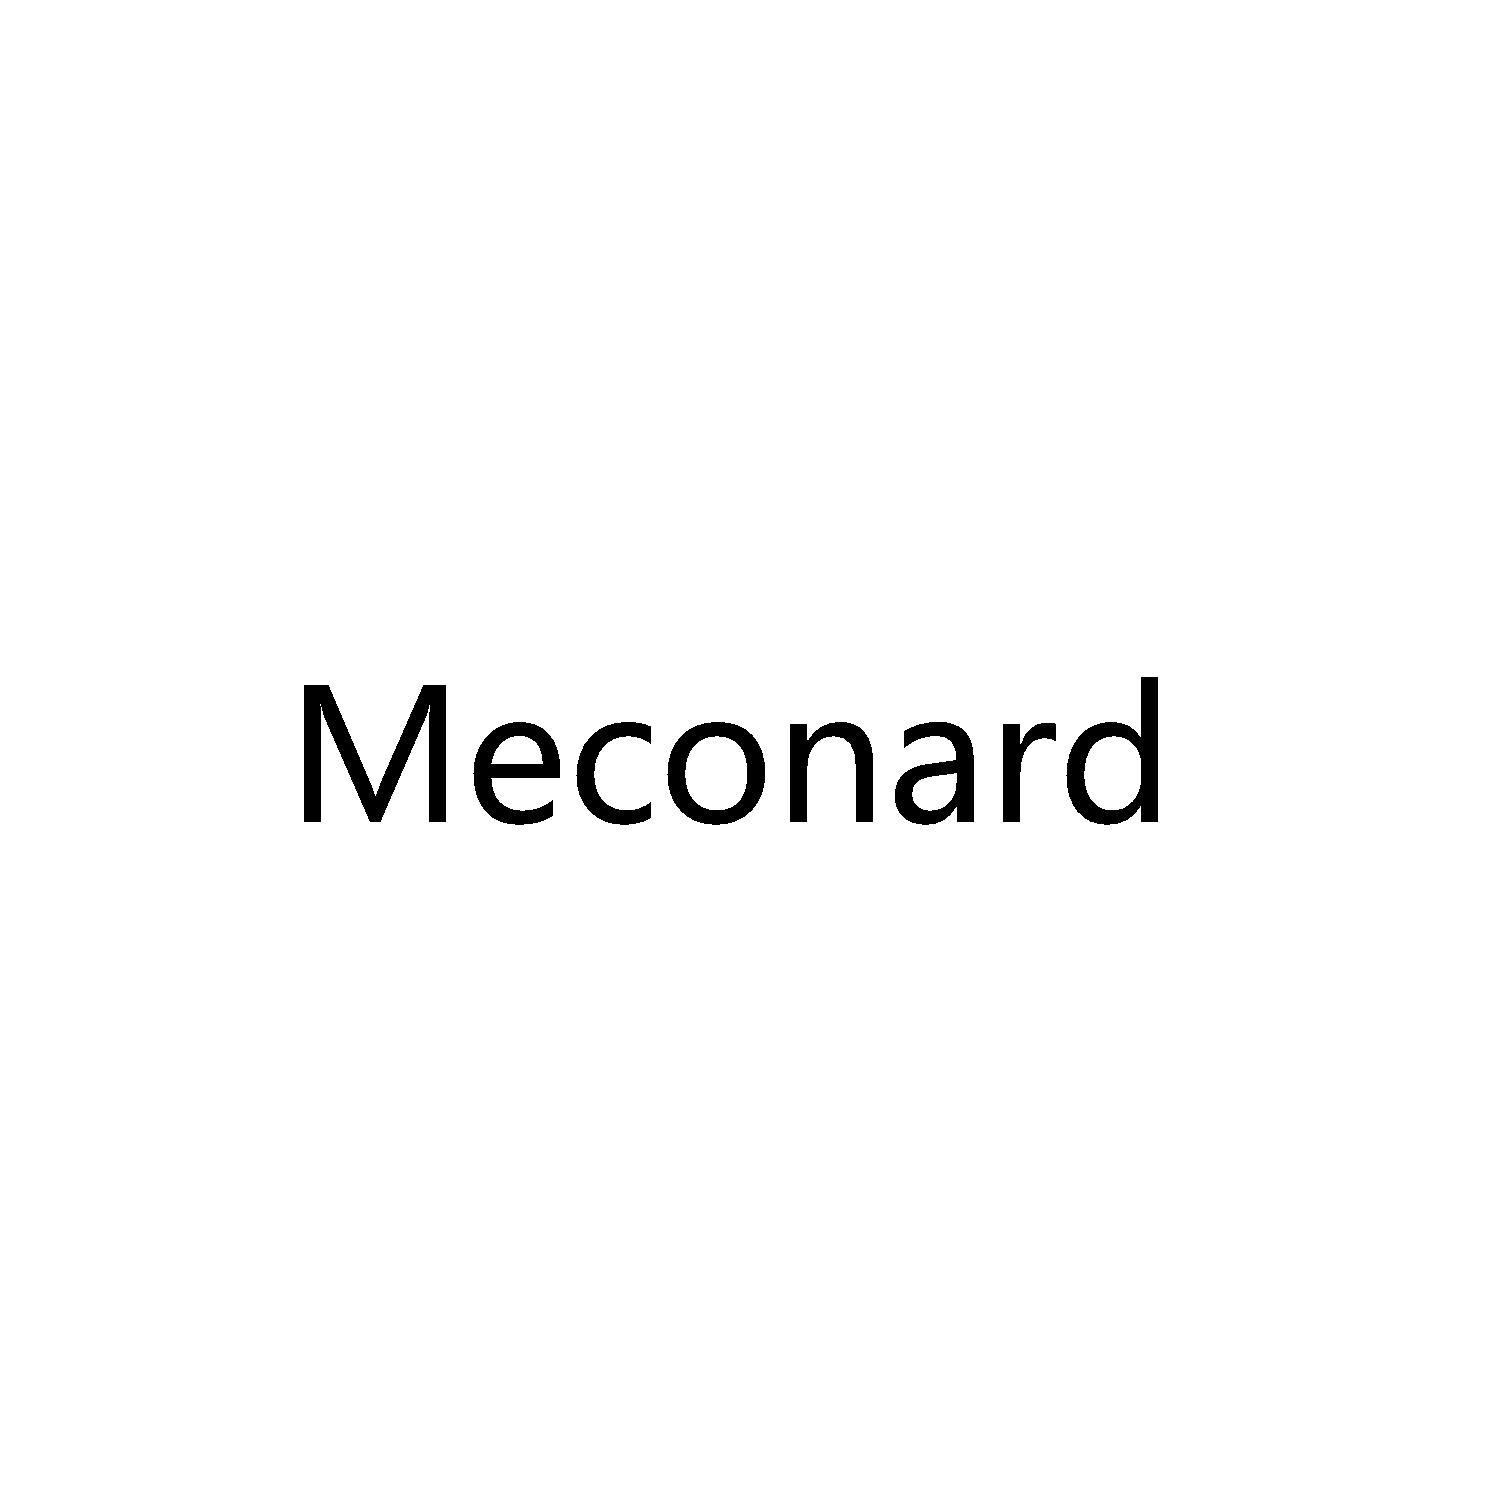 MECONARD 商标公告